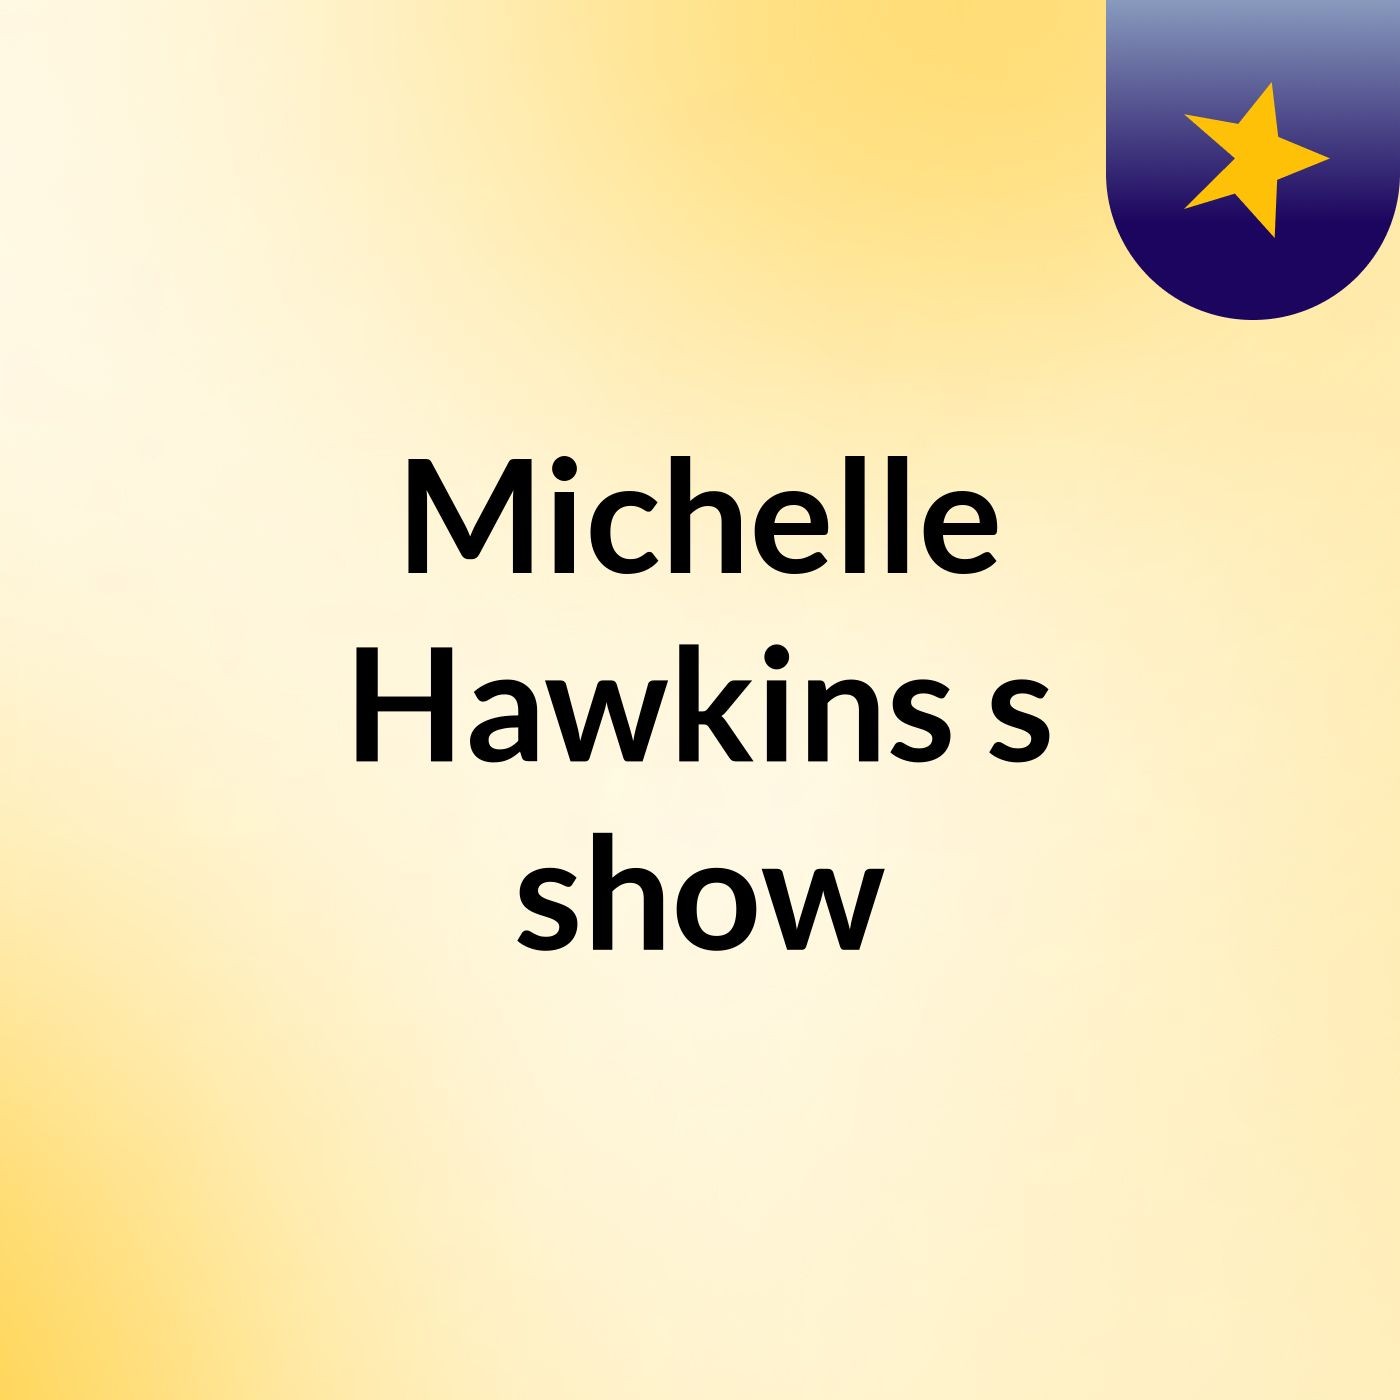 Michelle Hawkins's show